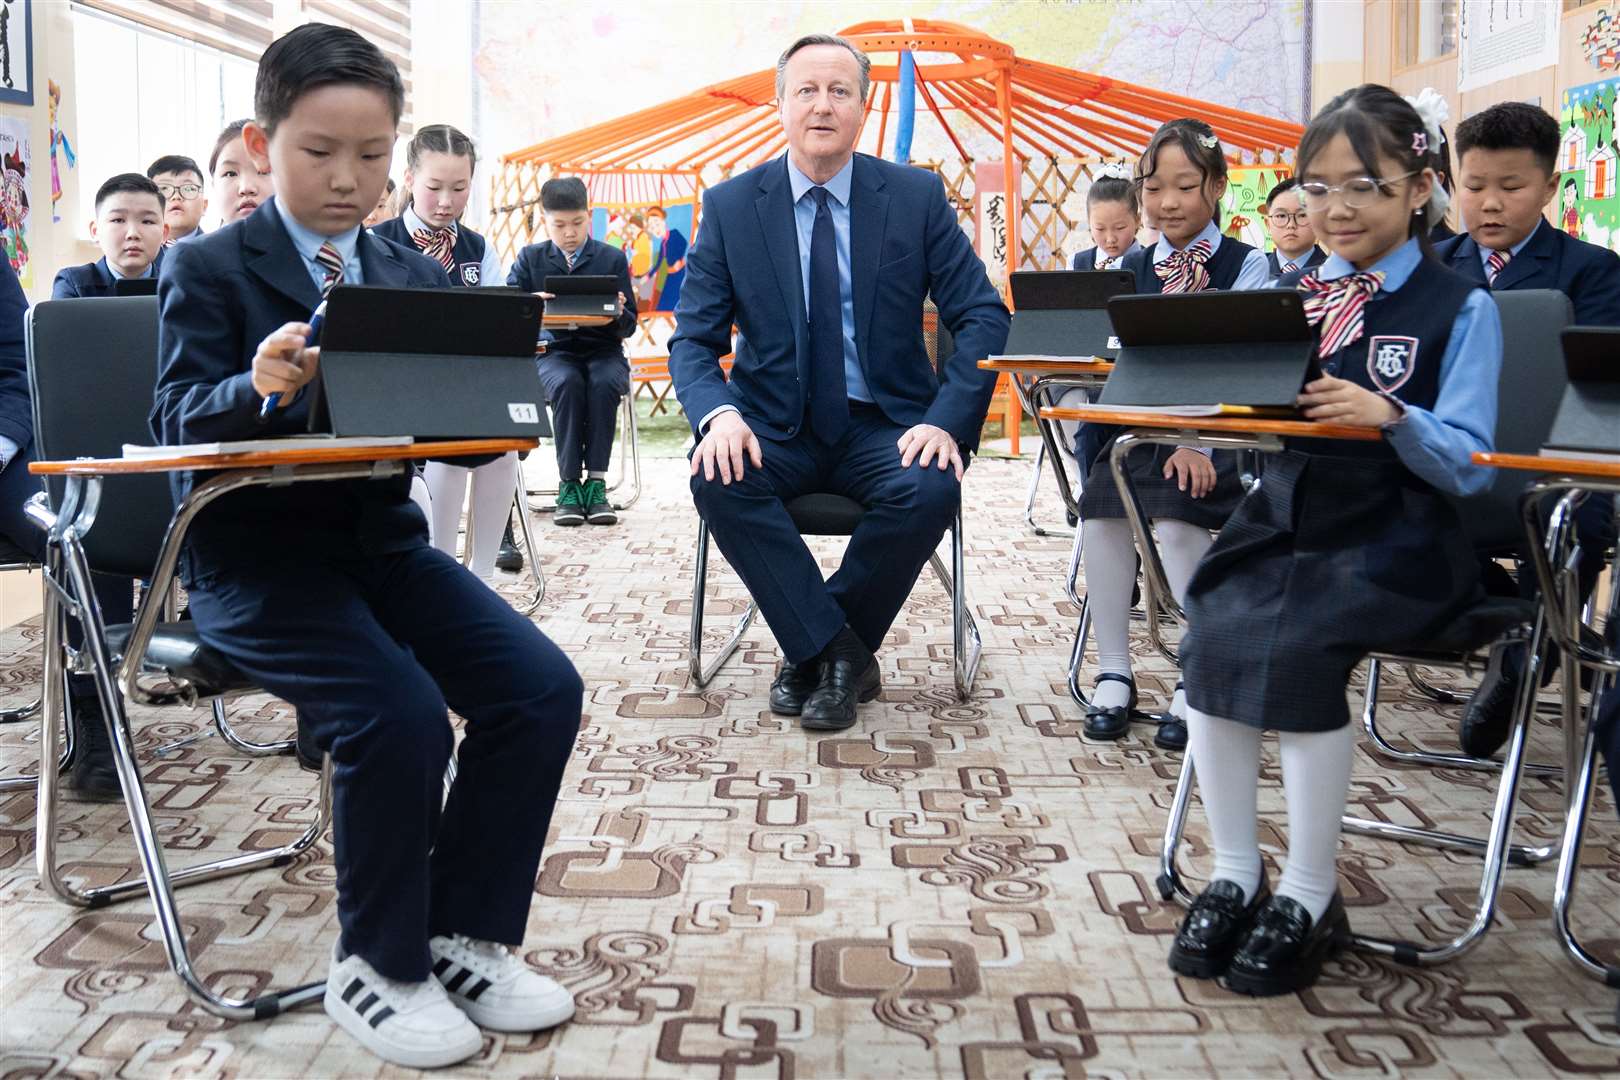 Lord Cameron meets pupils at School No 23 in Ulaanbaatar (Stefan Rousseau/PA)